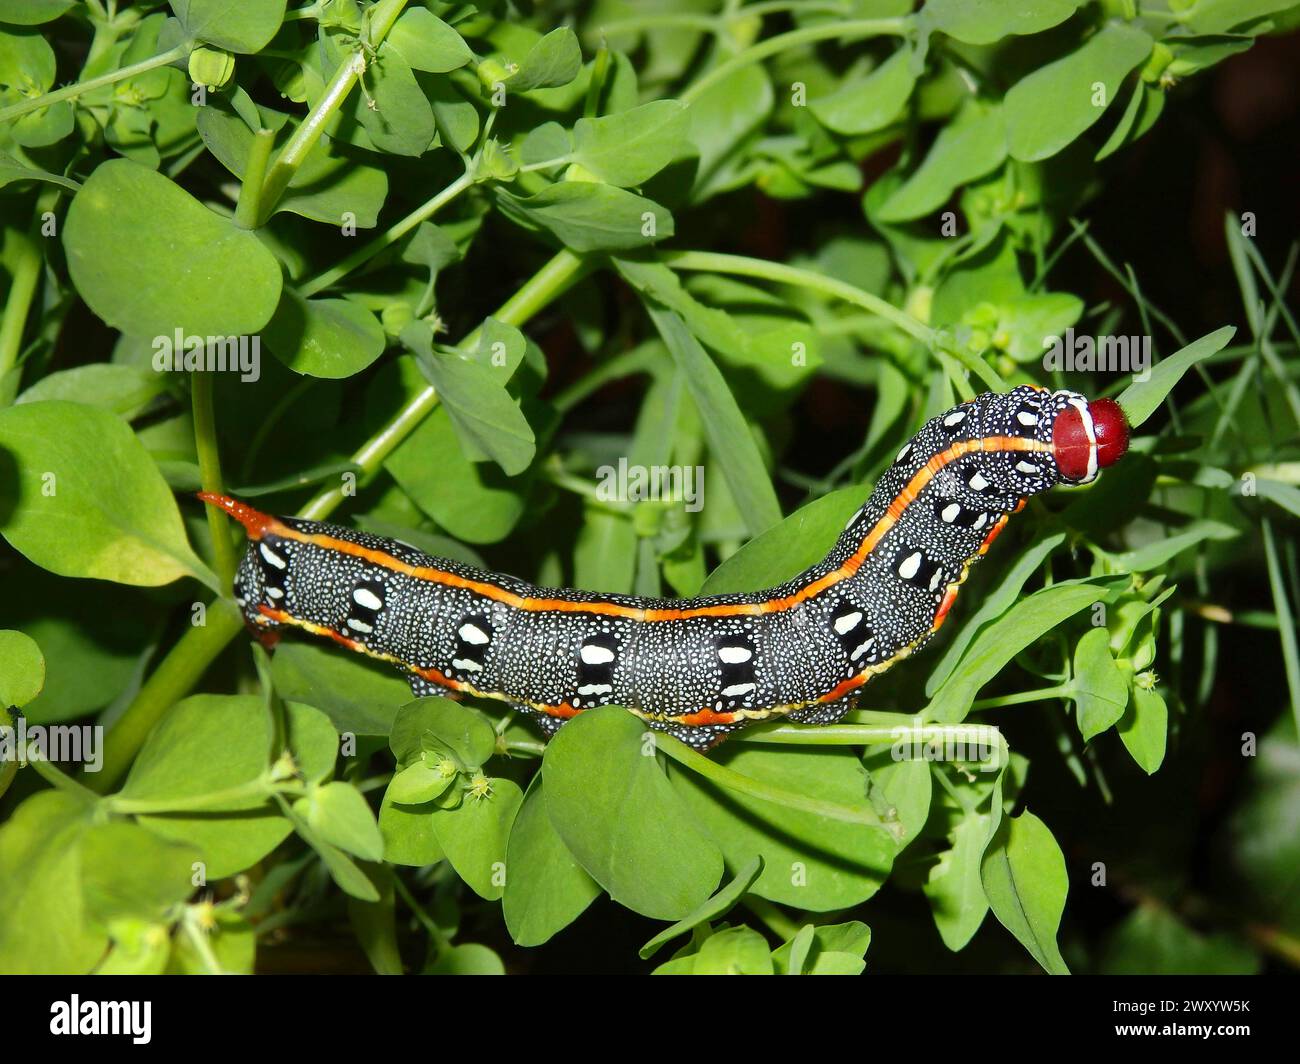 Smoky Spurge Hawk-moth (Hyles dahlii), Caterpillar at spurge, hawkmoth from the Mediterranean region Stock Photo